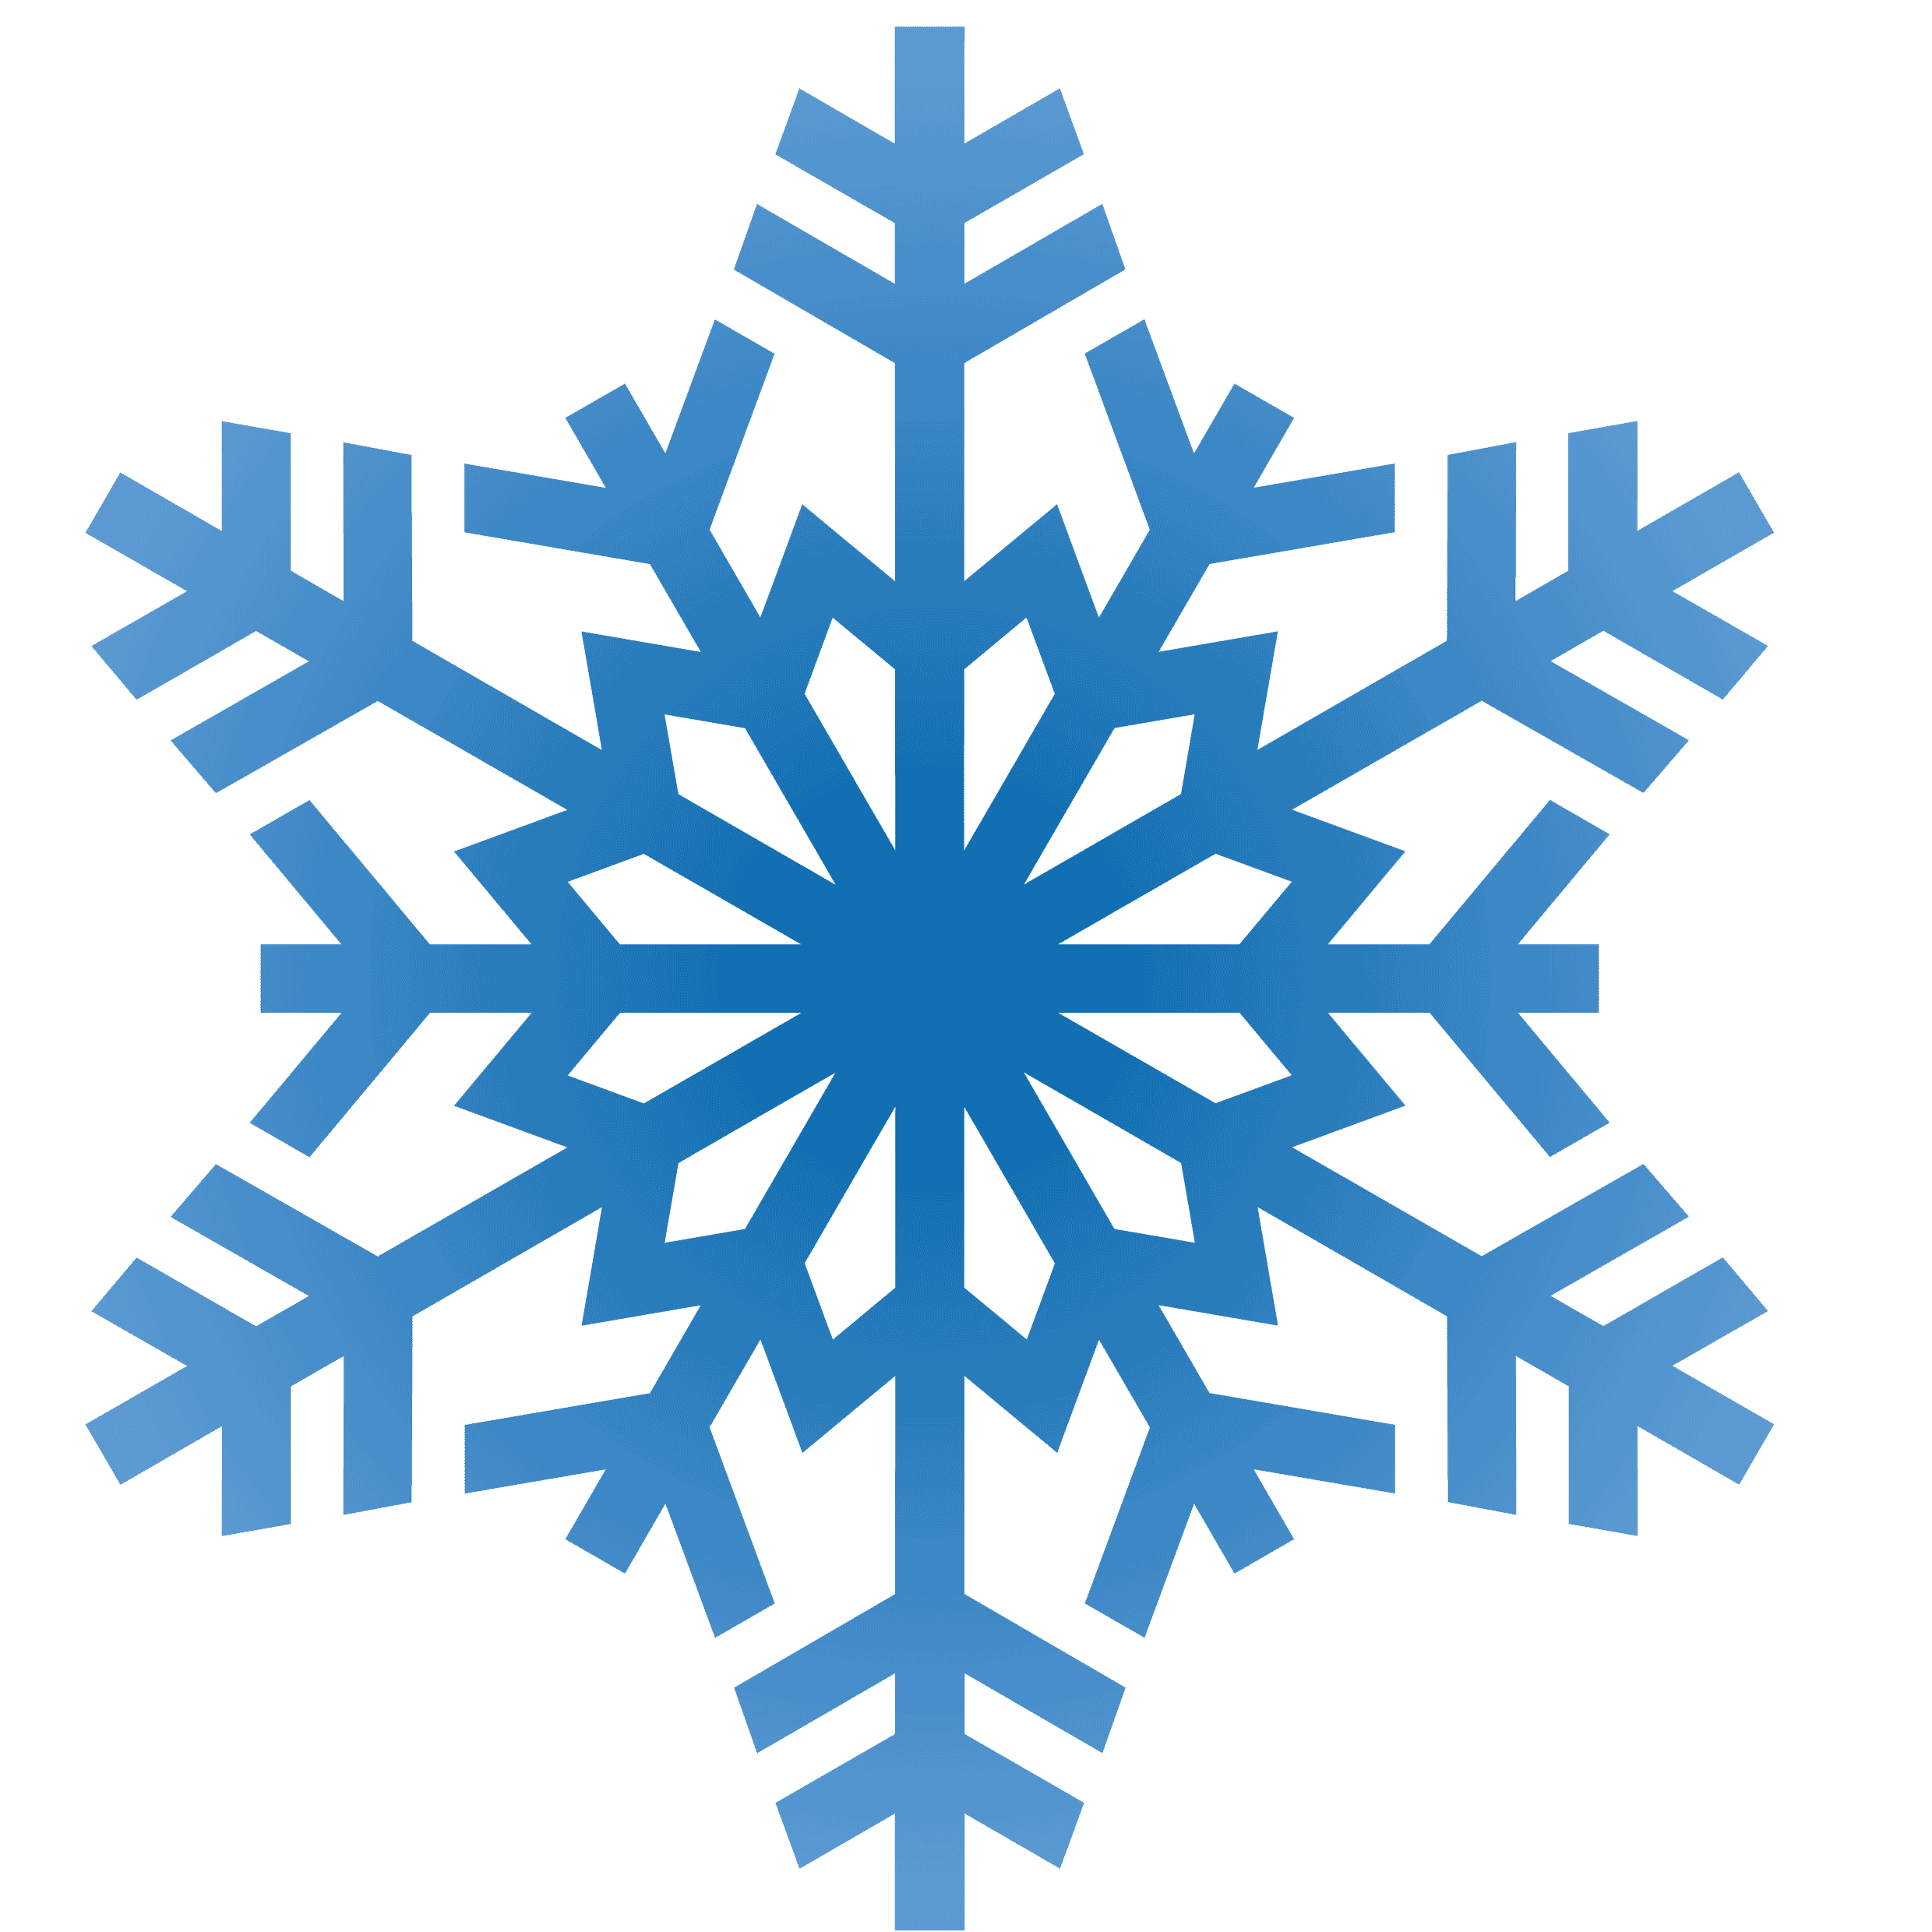 2018 clipart transparent background. Snowflakes snowflake free scotland